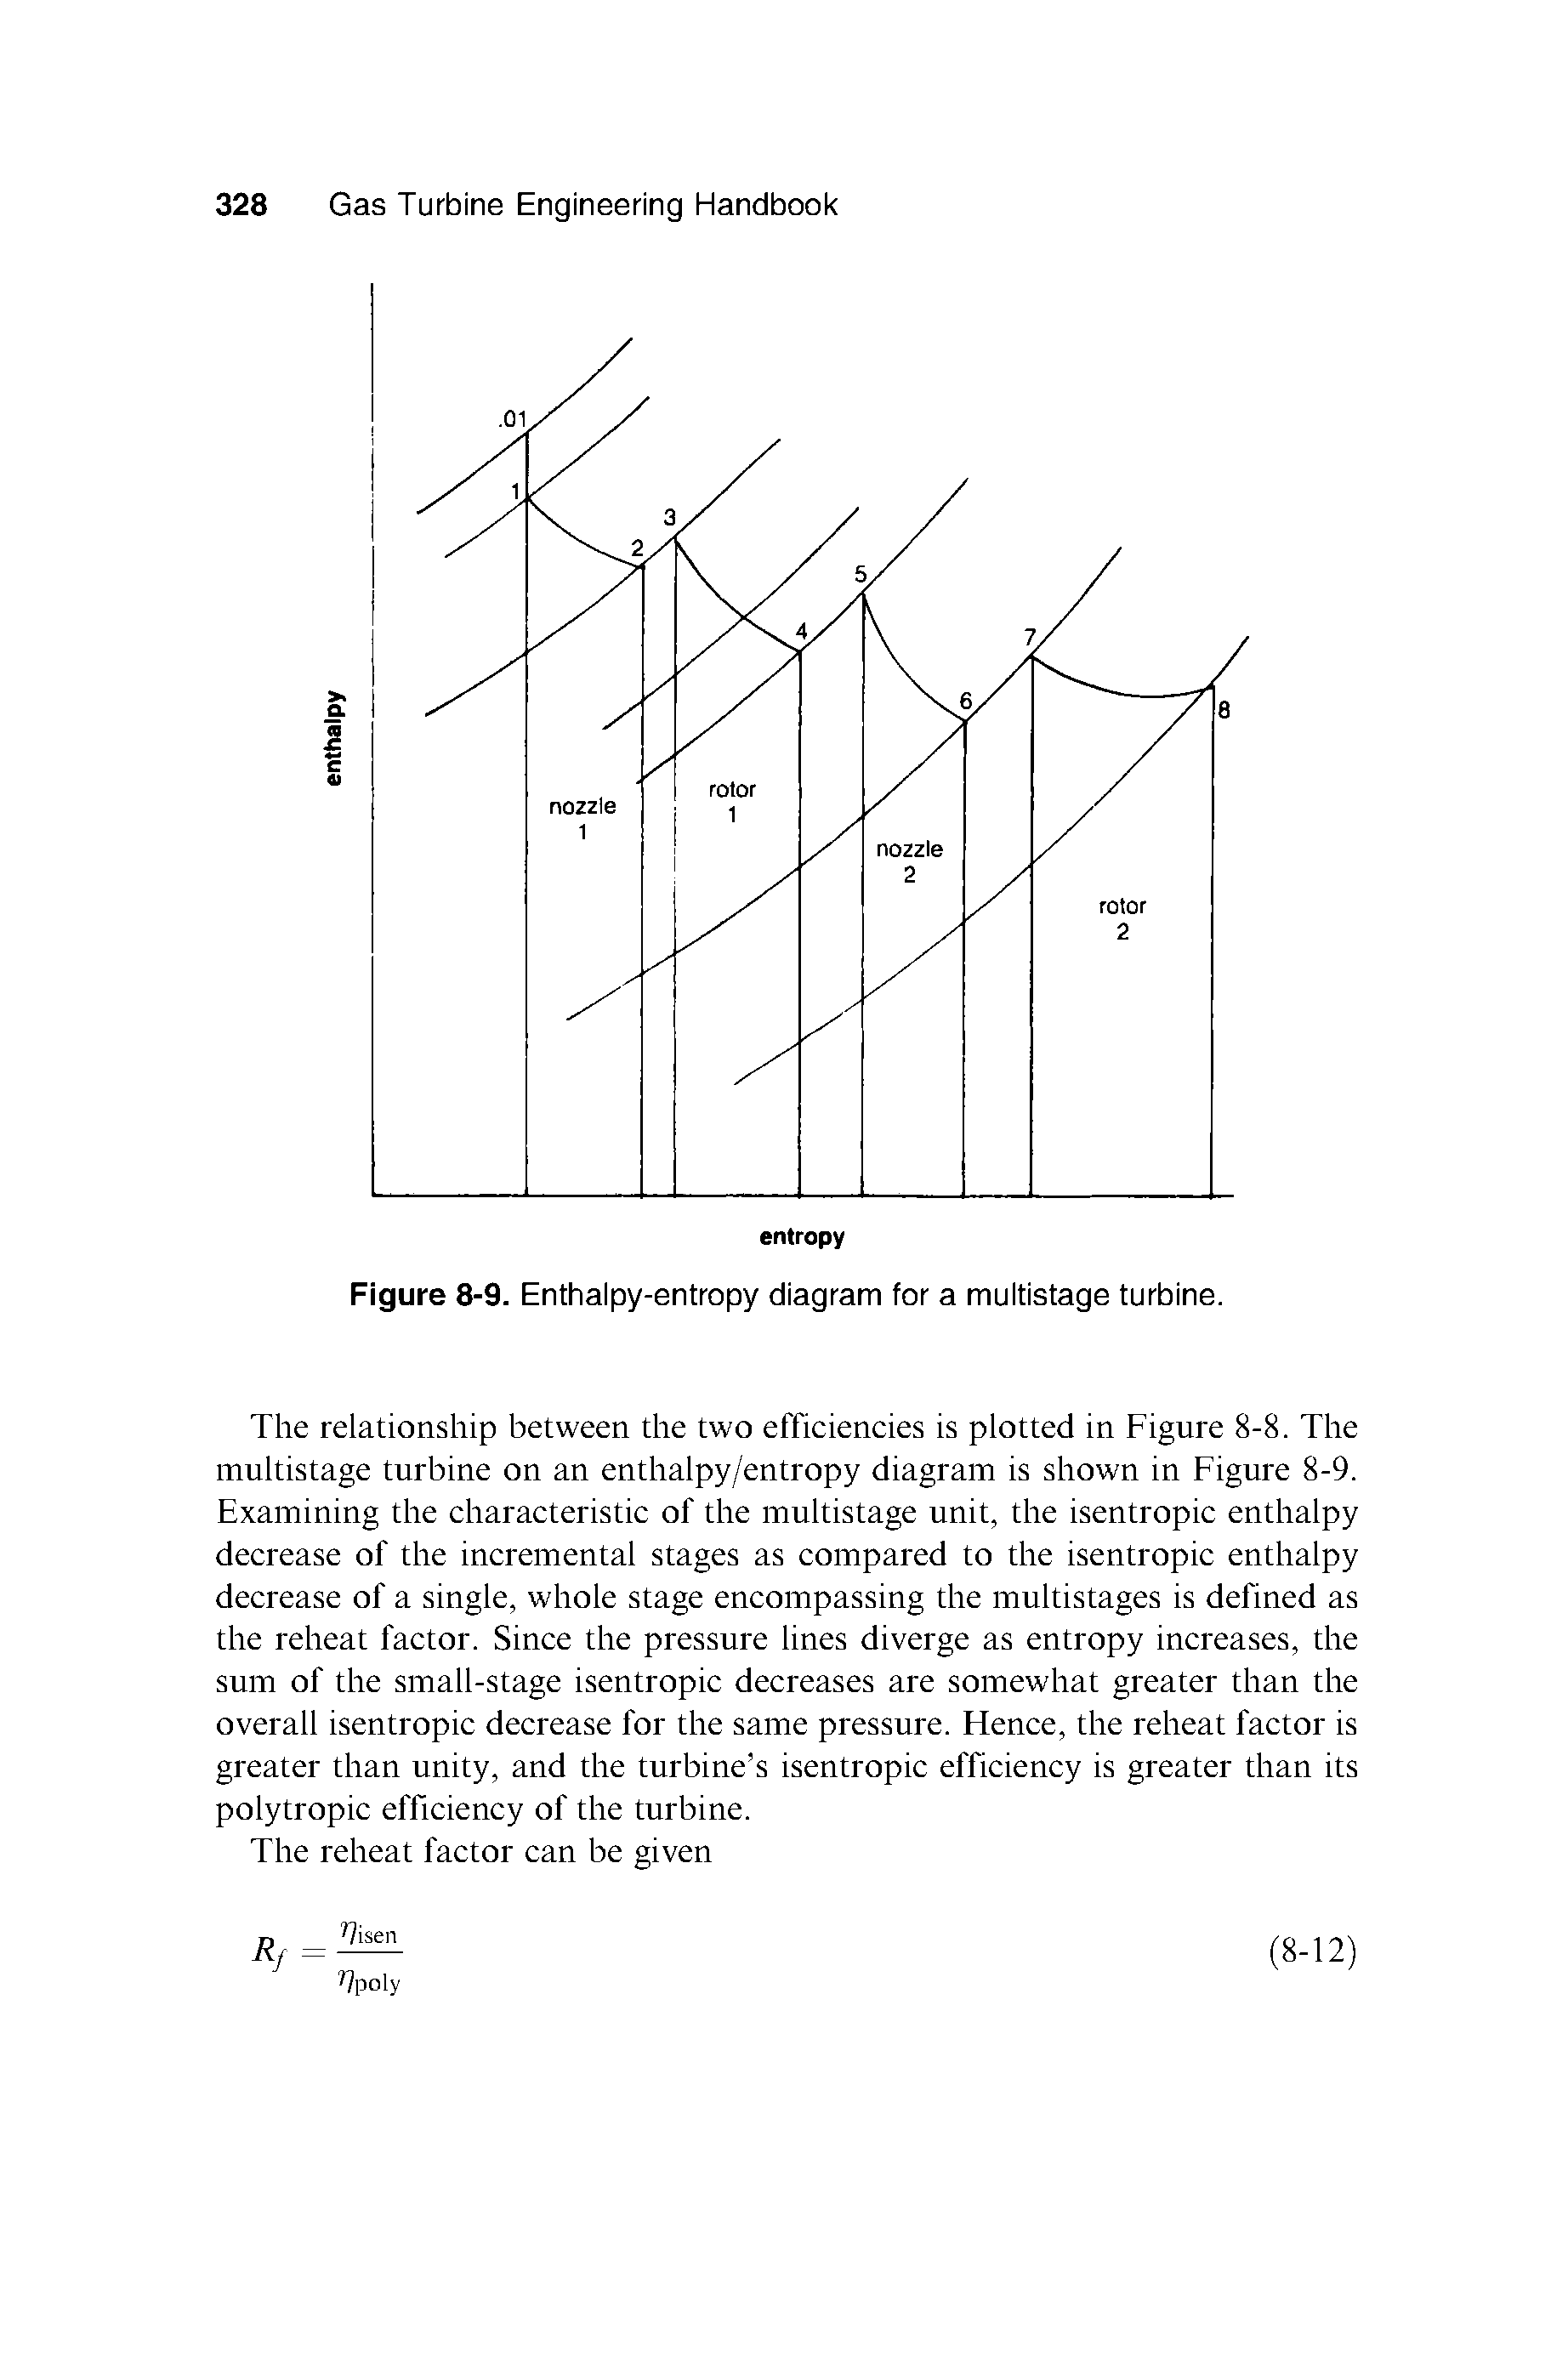 Figure 8-9. Enthaipy-entropy diagram for a muitistage turbine.